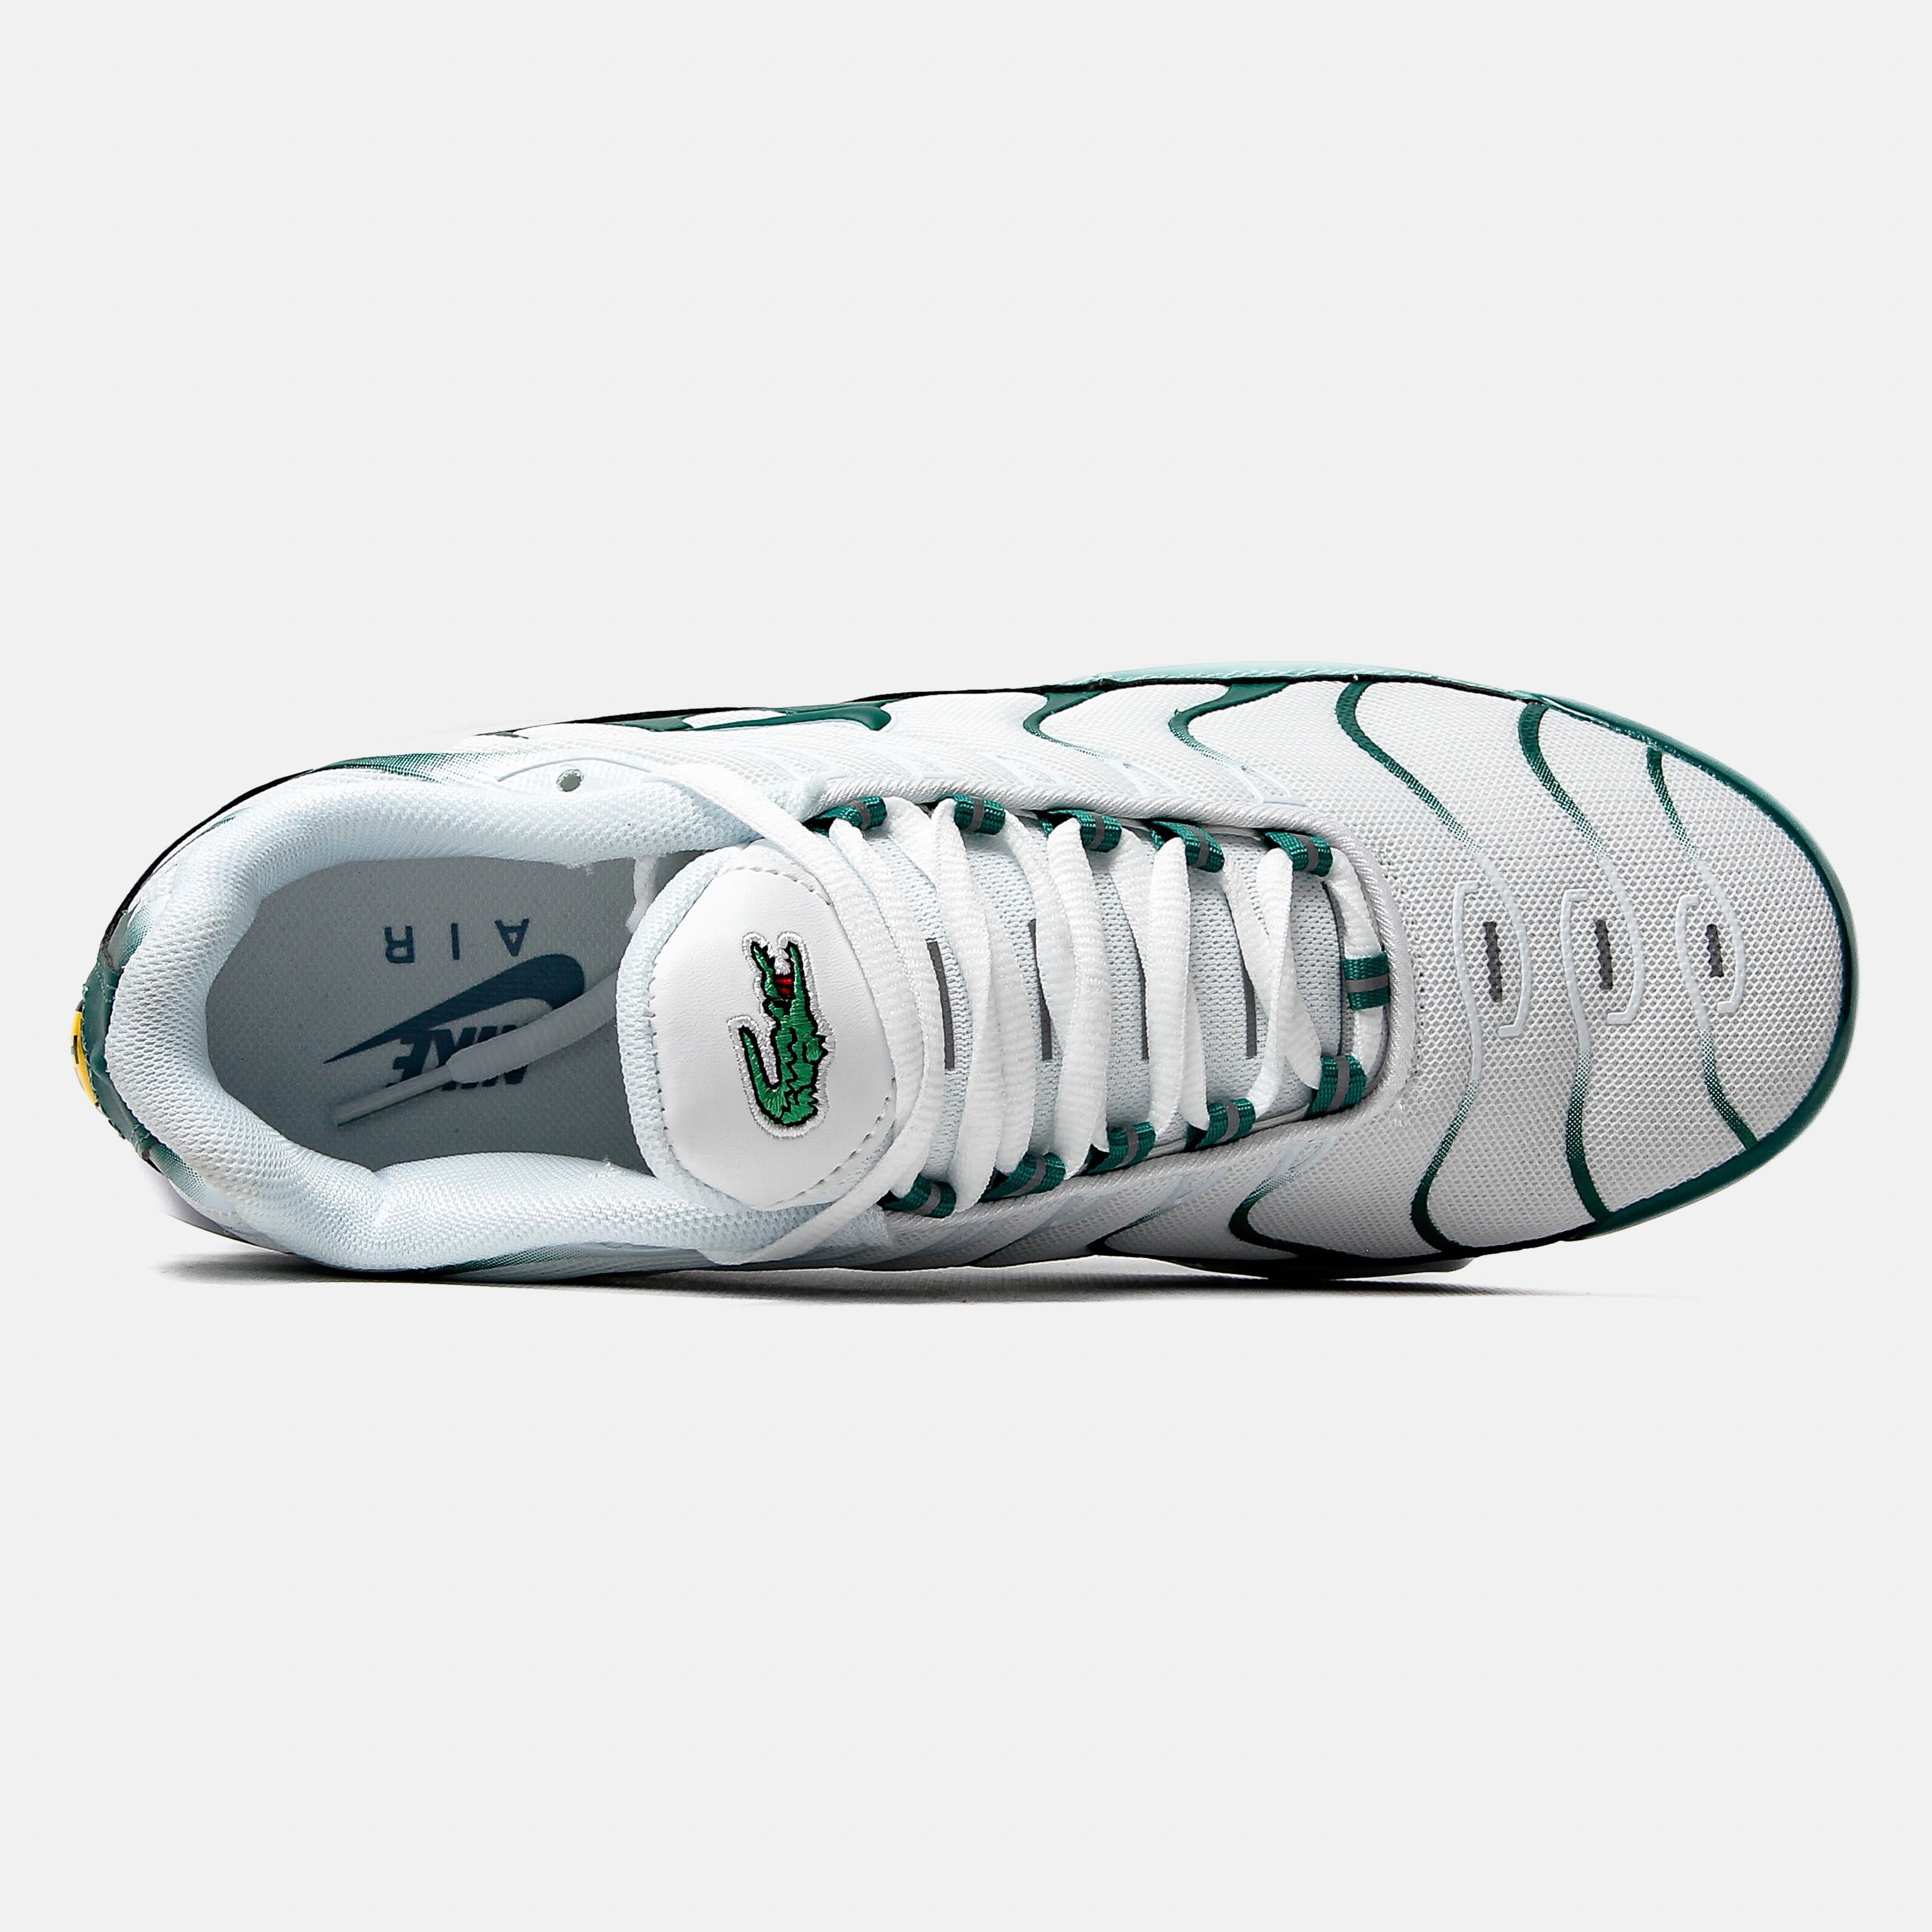 Мужские кроссовки Nike Air Max TN x Lacoste. Размеры 41-45